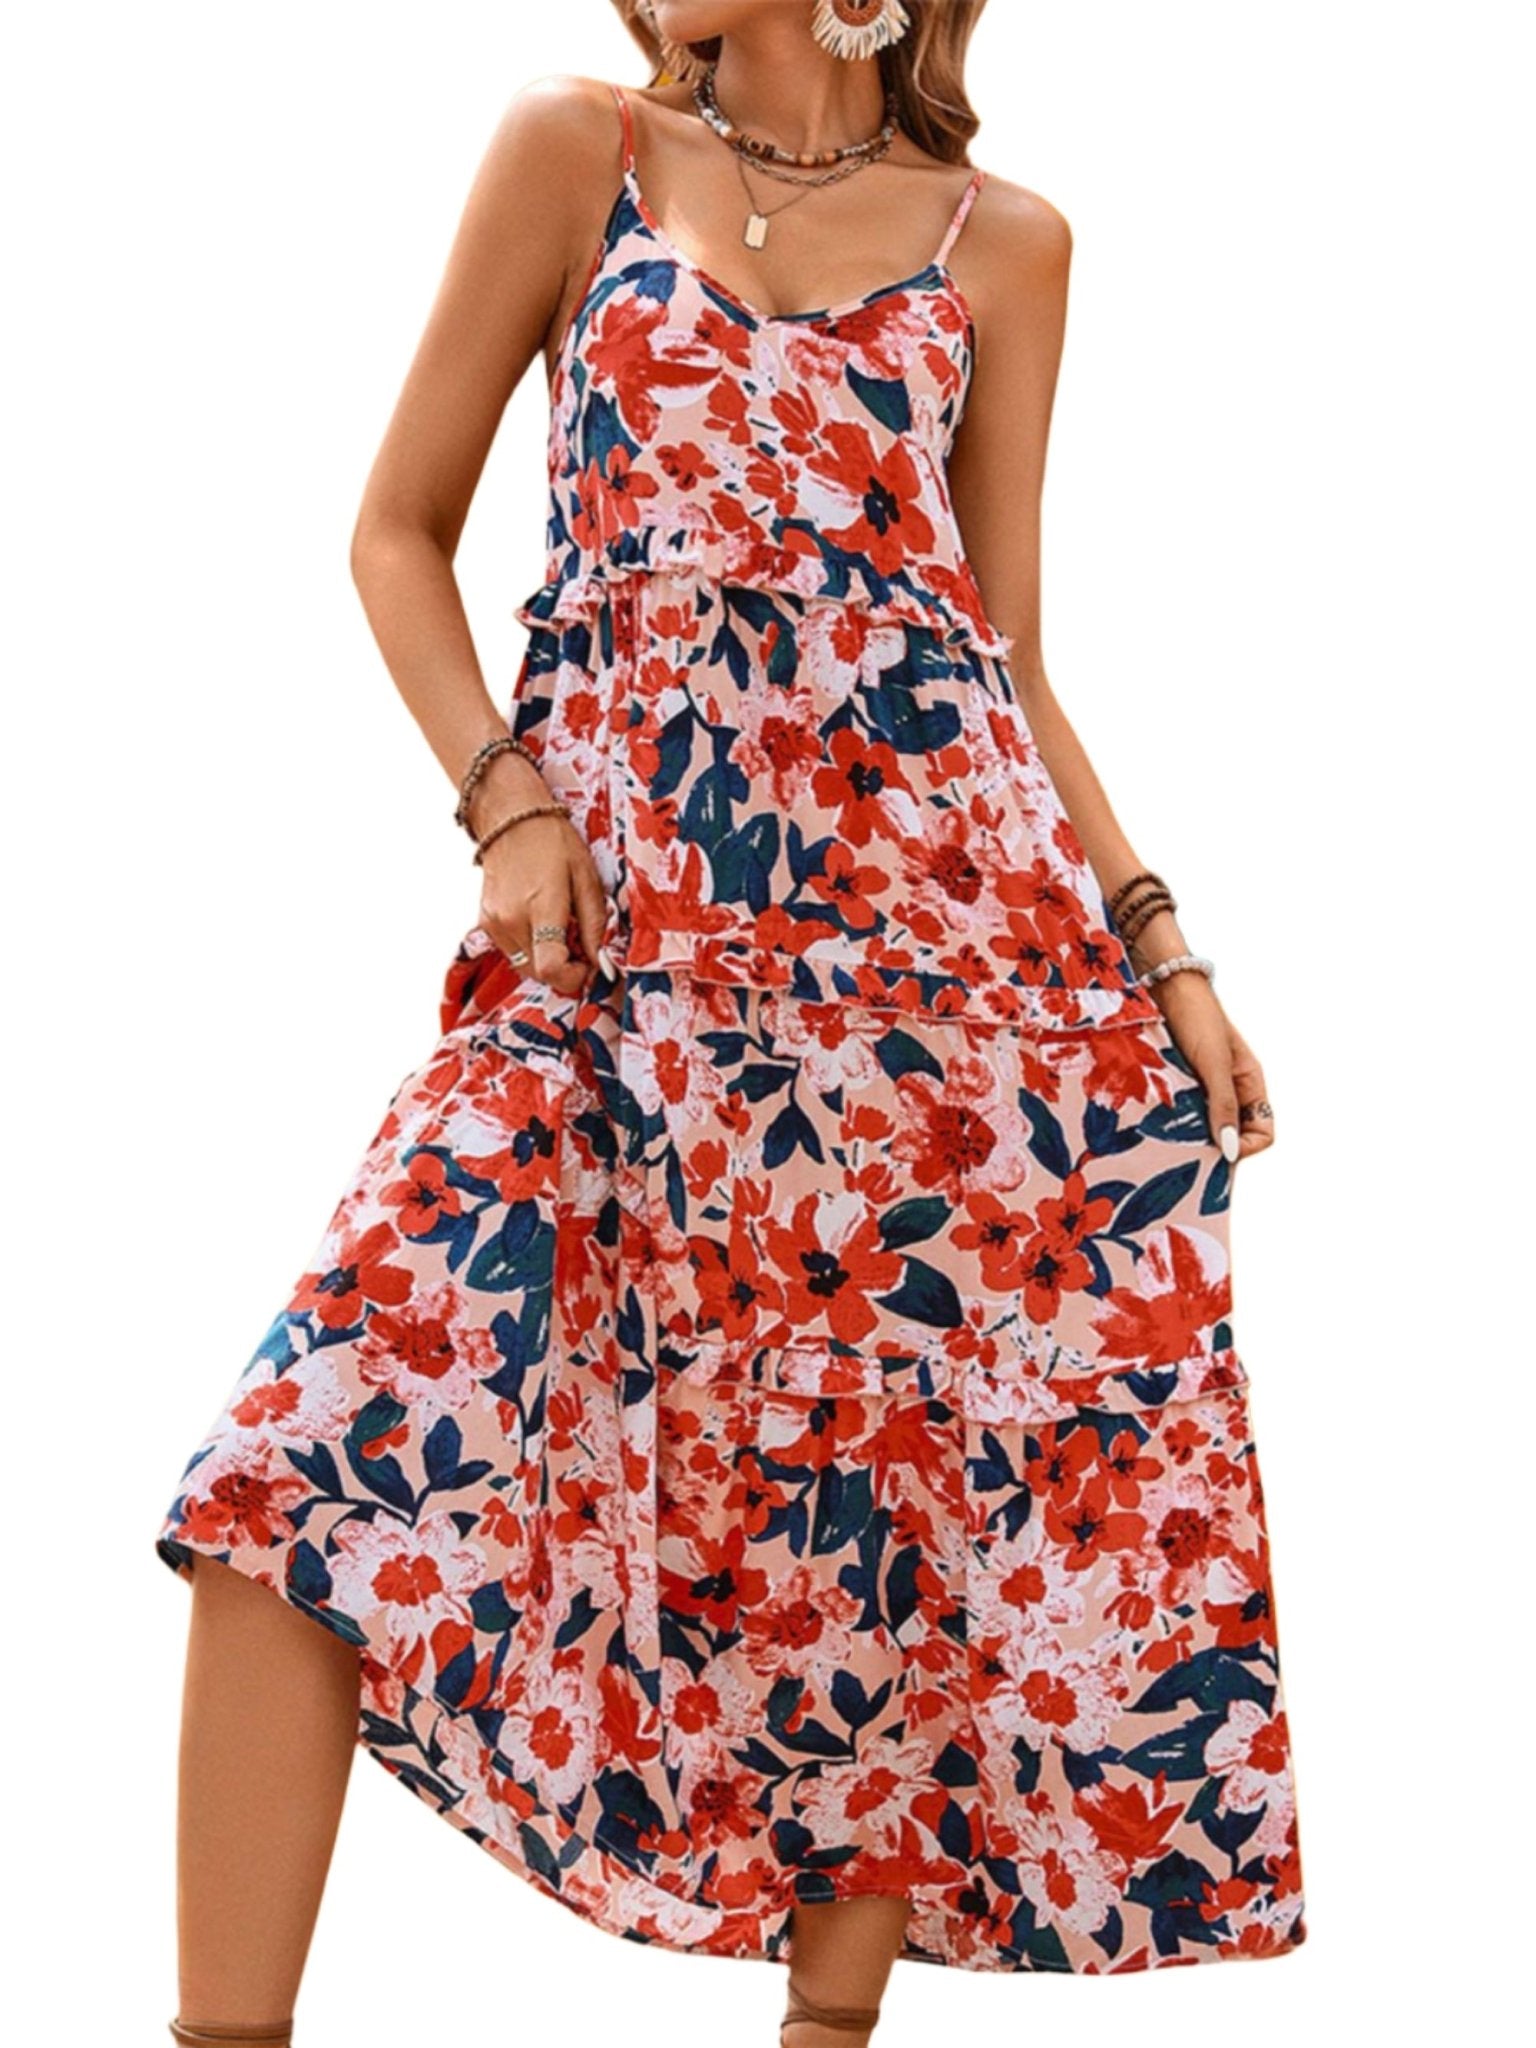 The image is showcasing a Frill Backless Floral Sleeveless Maxi Dress Casual Summer Boho Long Sundress Beach Dress at Mommy & Lino's Closet